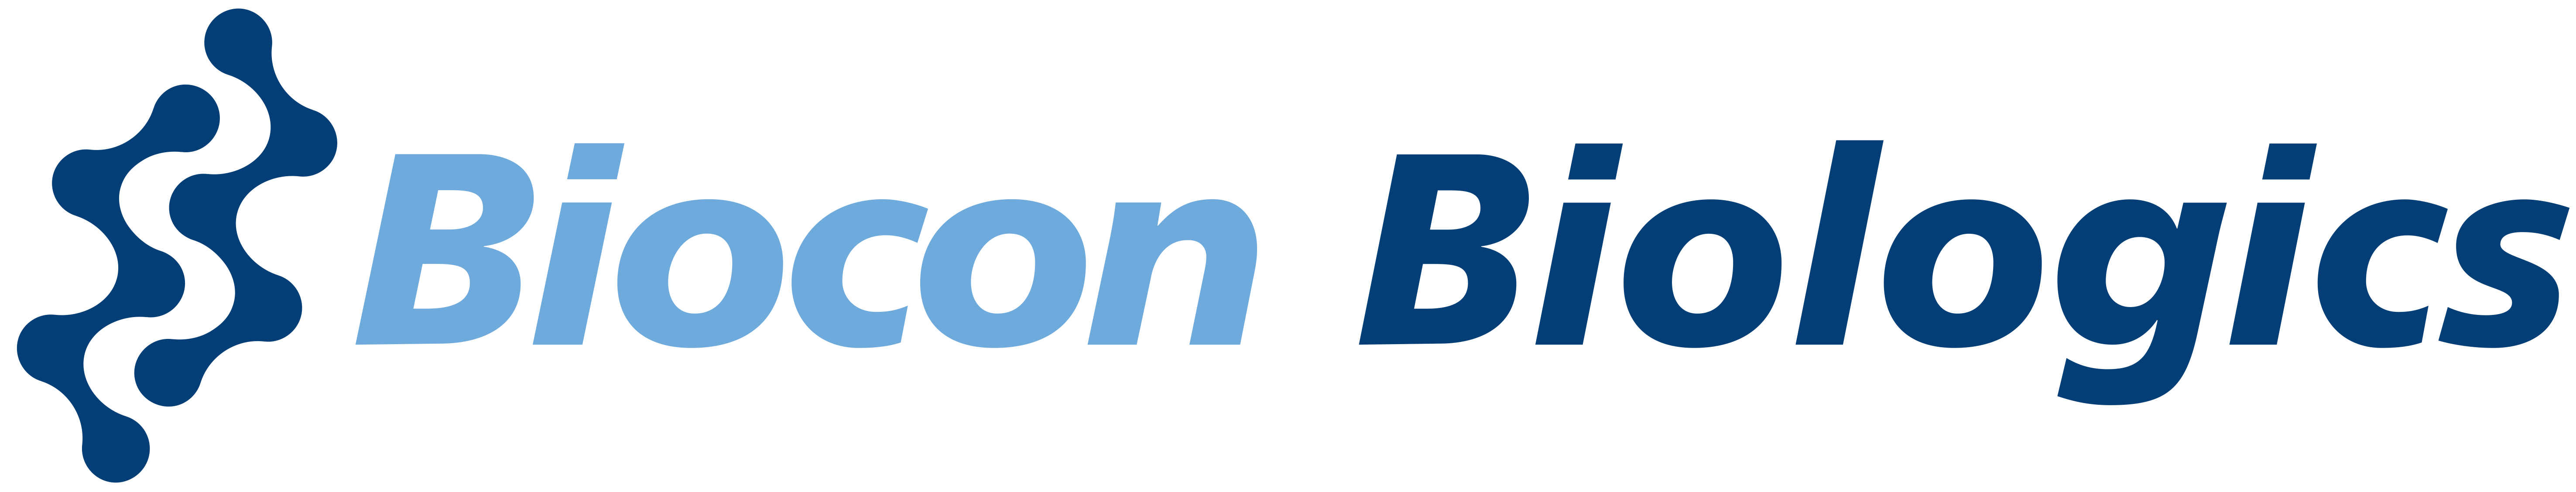 Biocon-Biologics-Logo.png